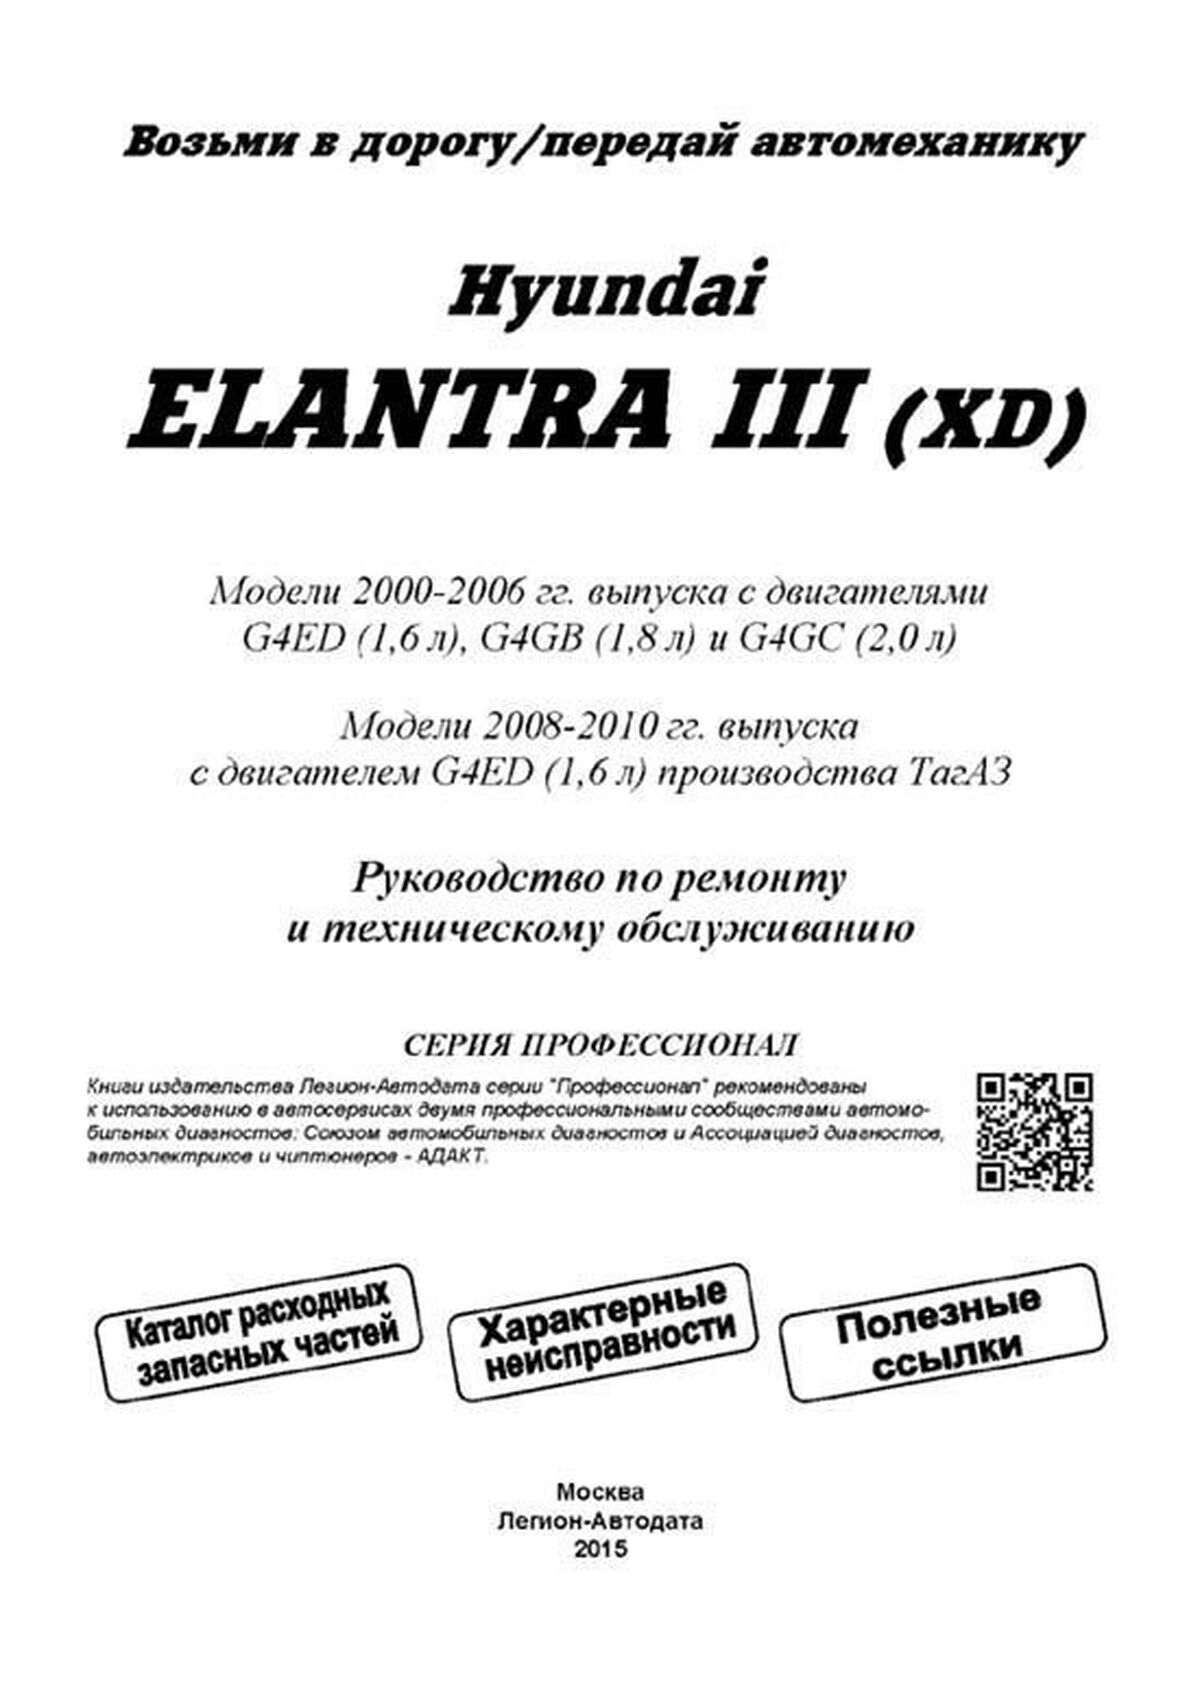 Книга: HYUNDAI ELANTRA III (XD) (б) 2000-2006 / 2008-2010 г.в., рем., экспл., то, сер.ПРОФ. | Легион-Aвтодата